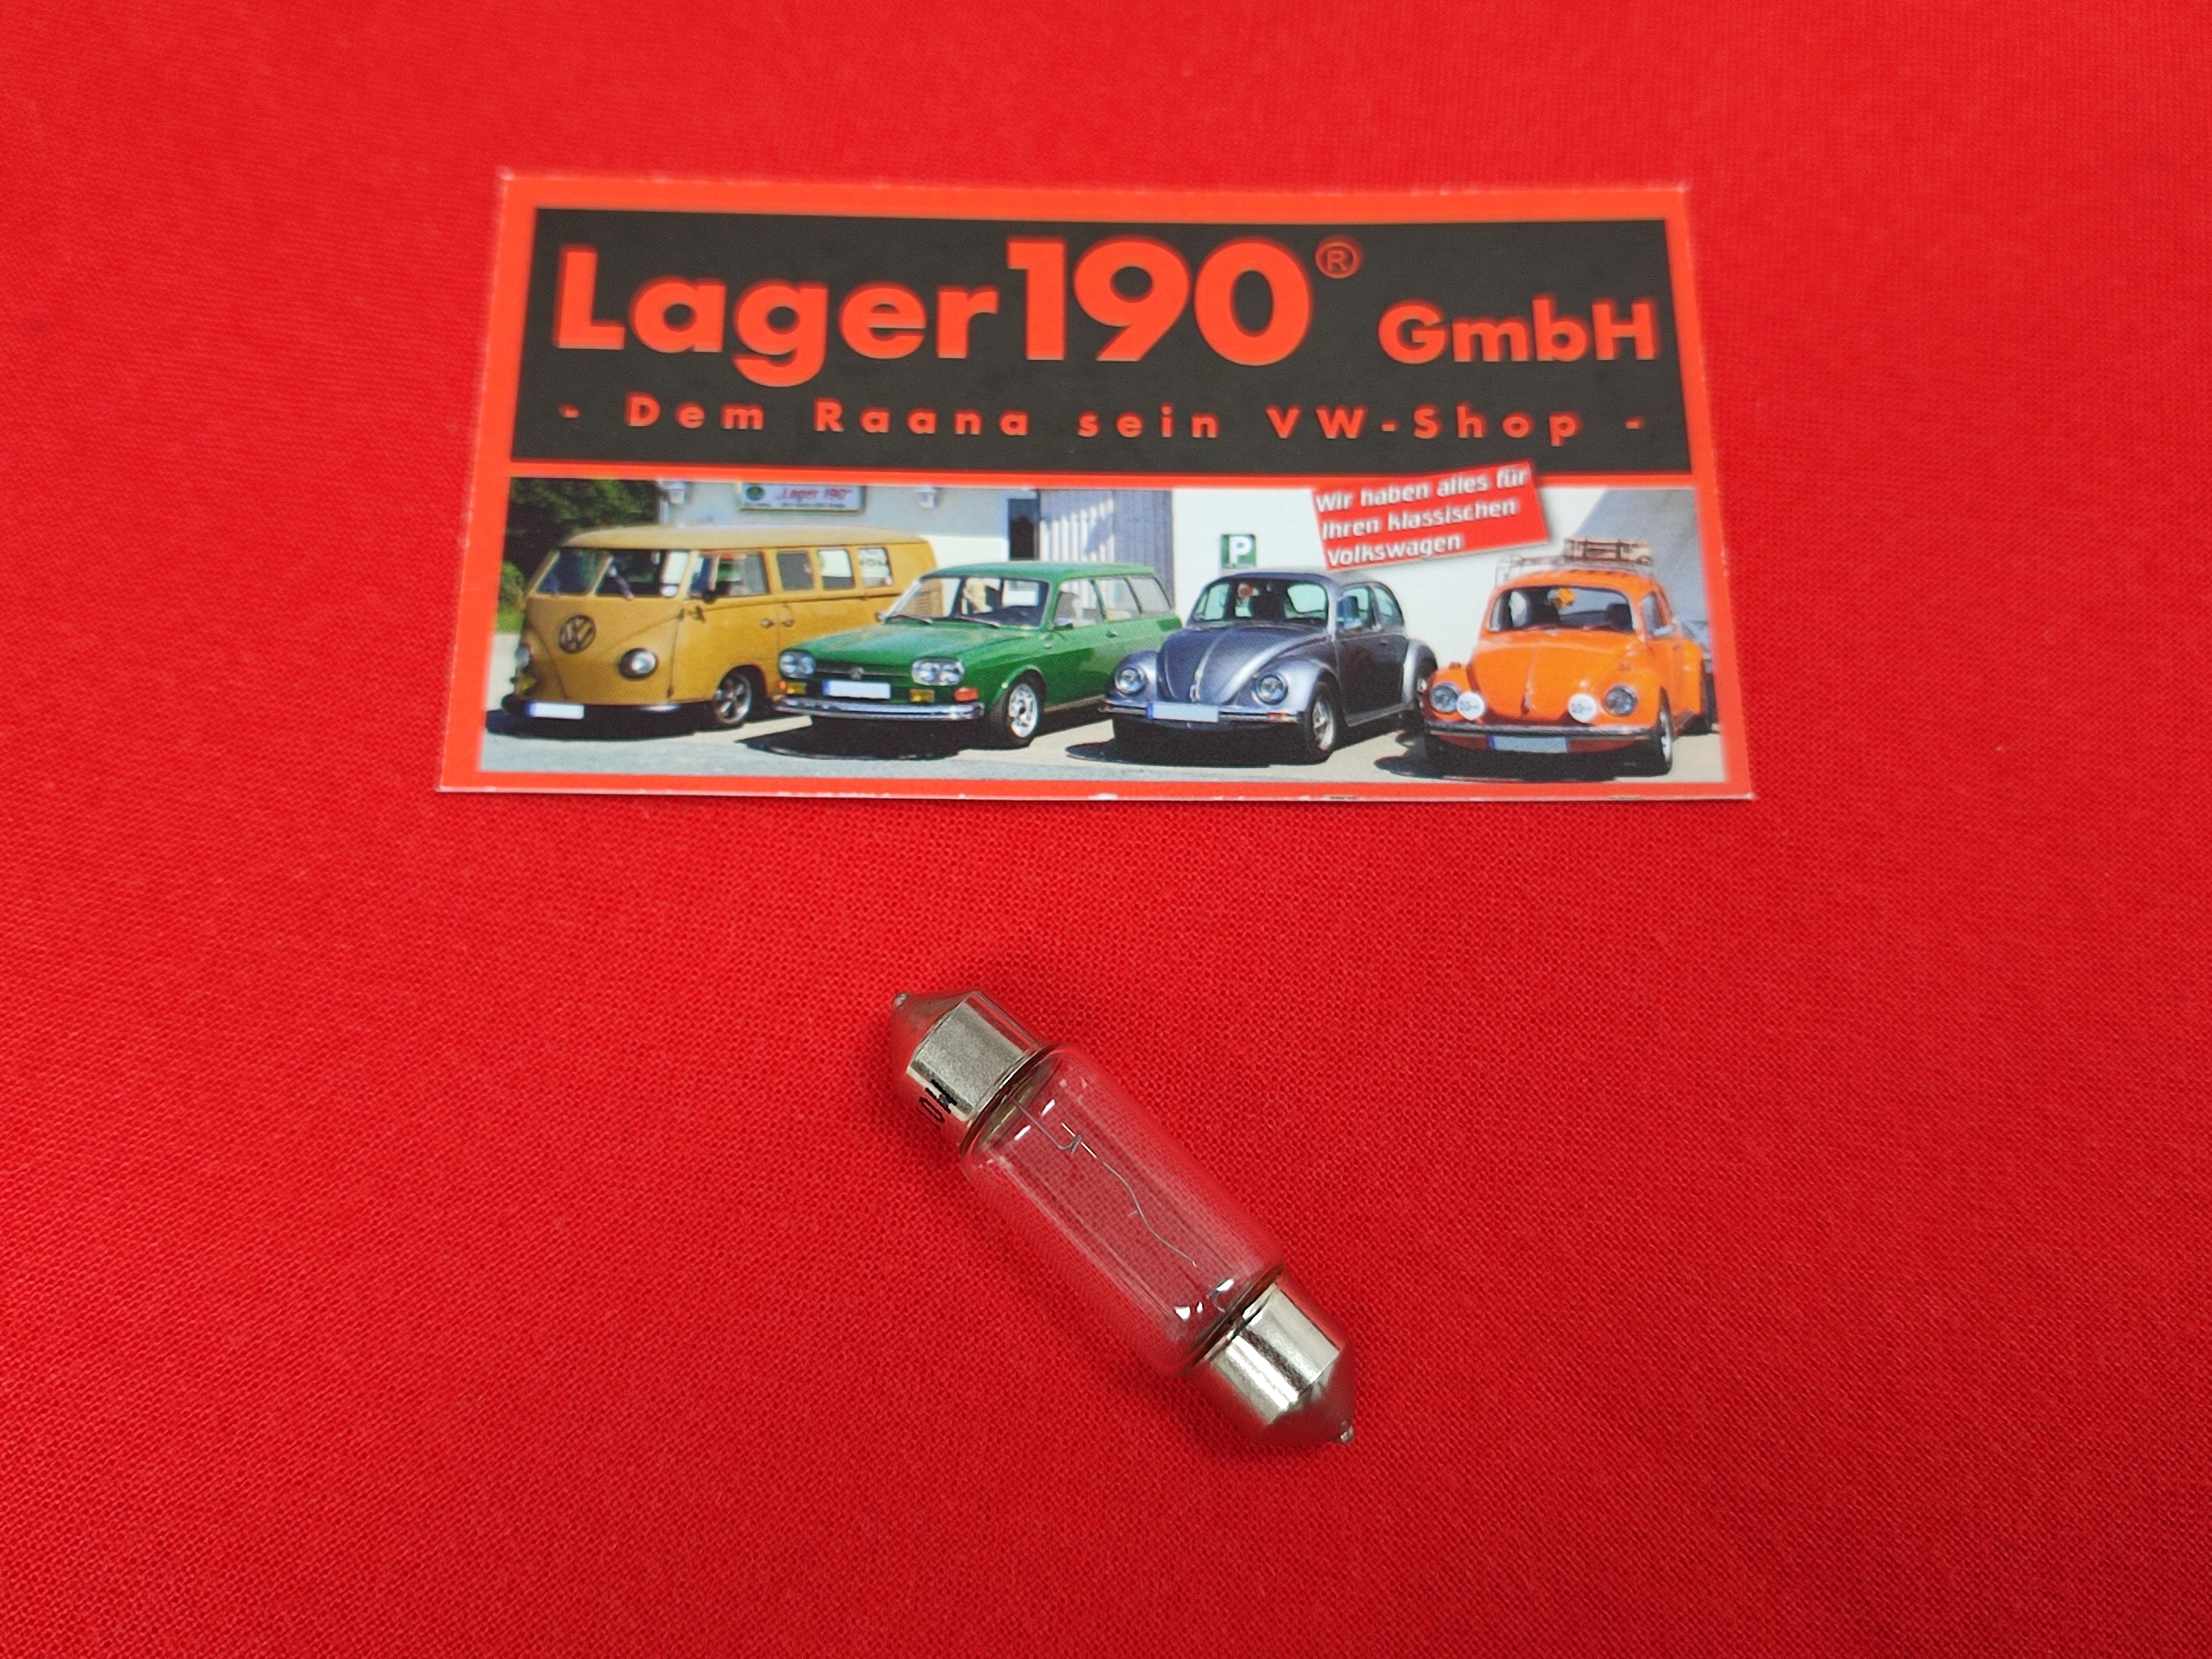 Soffitte 12V 10W 37mm Innenbeleuchtung (09-004) - Lager190 GmbH -Dem Raana  sein VW Shop